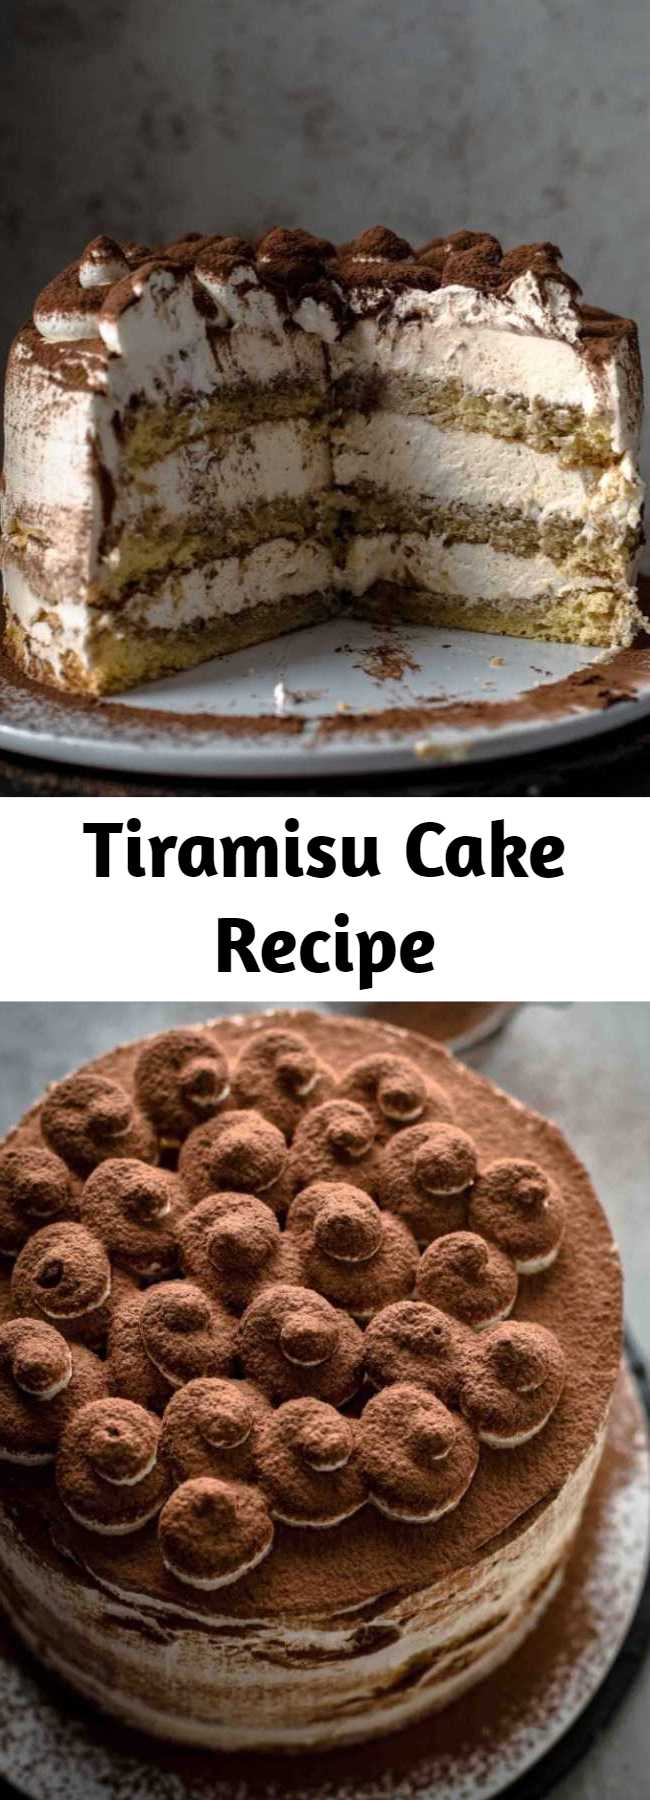 Tiramisu Cake Recipe - If you want to have Tiramisu and cake at the same time, then this Tiramisu Cake is the solution. 5 ingredient genoise cake brushed with strong espresso and filled with irresistibly creamy coffee mascarpone cream. No raw eggs in the frosting. Just 10 ingredients! #tiramisu #tiramisucake #cake #italiandessert #dessert #baking #tiramisucakerecipe